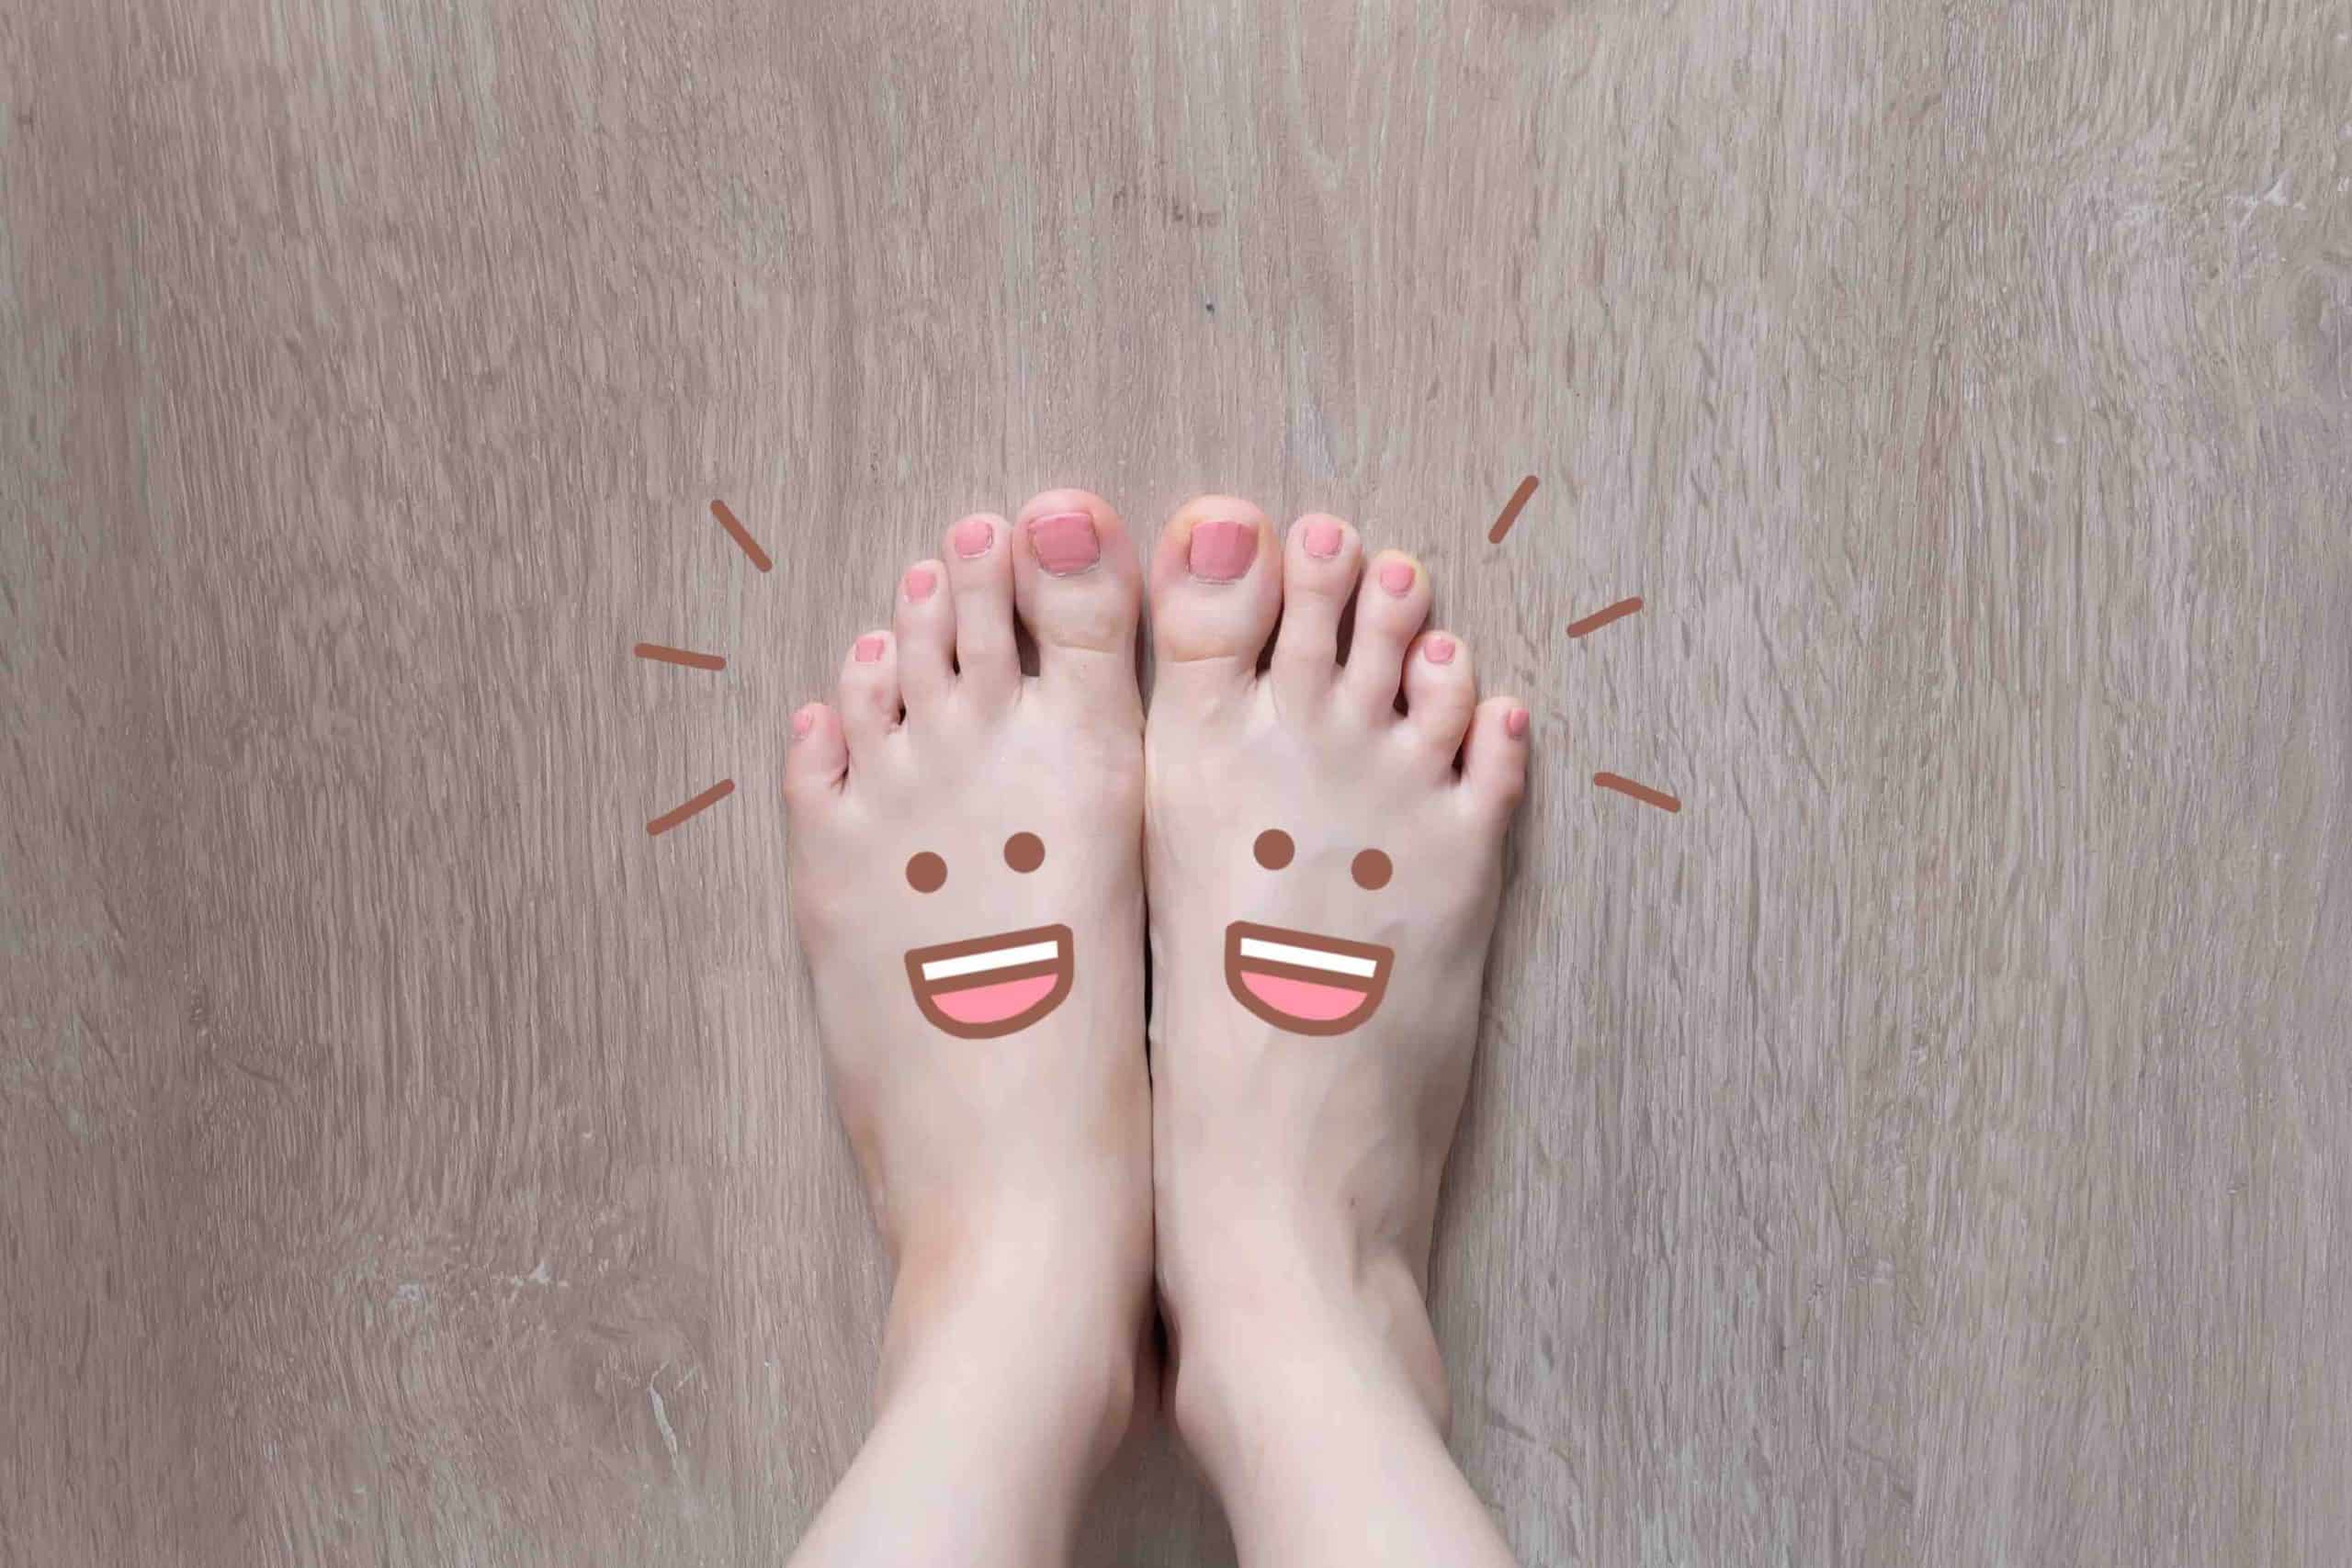 Feetpics